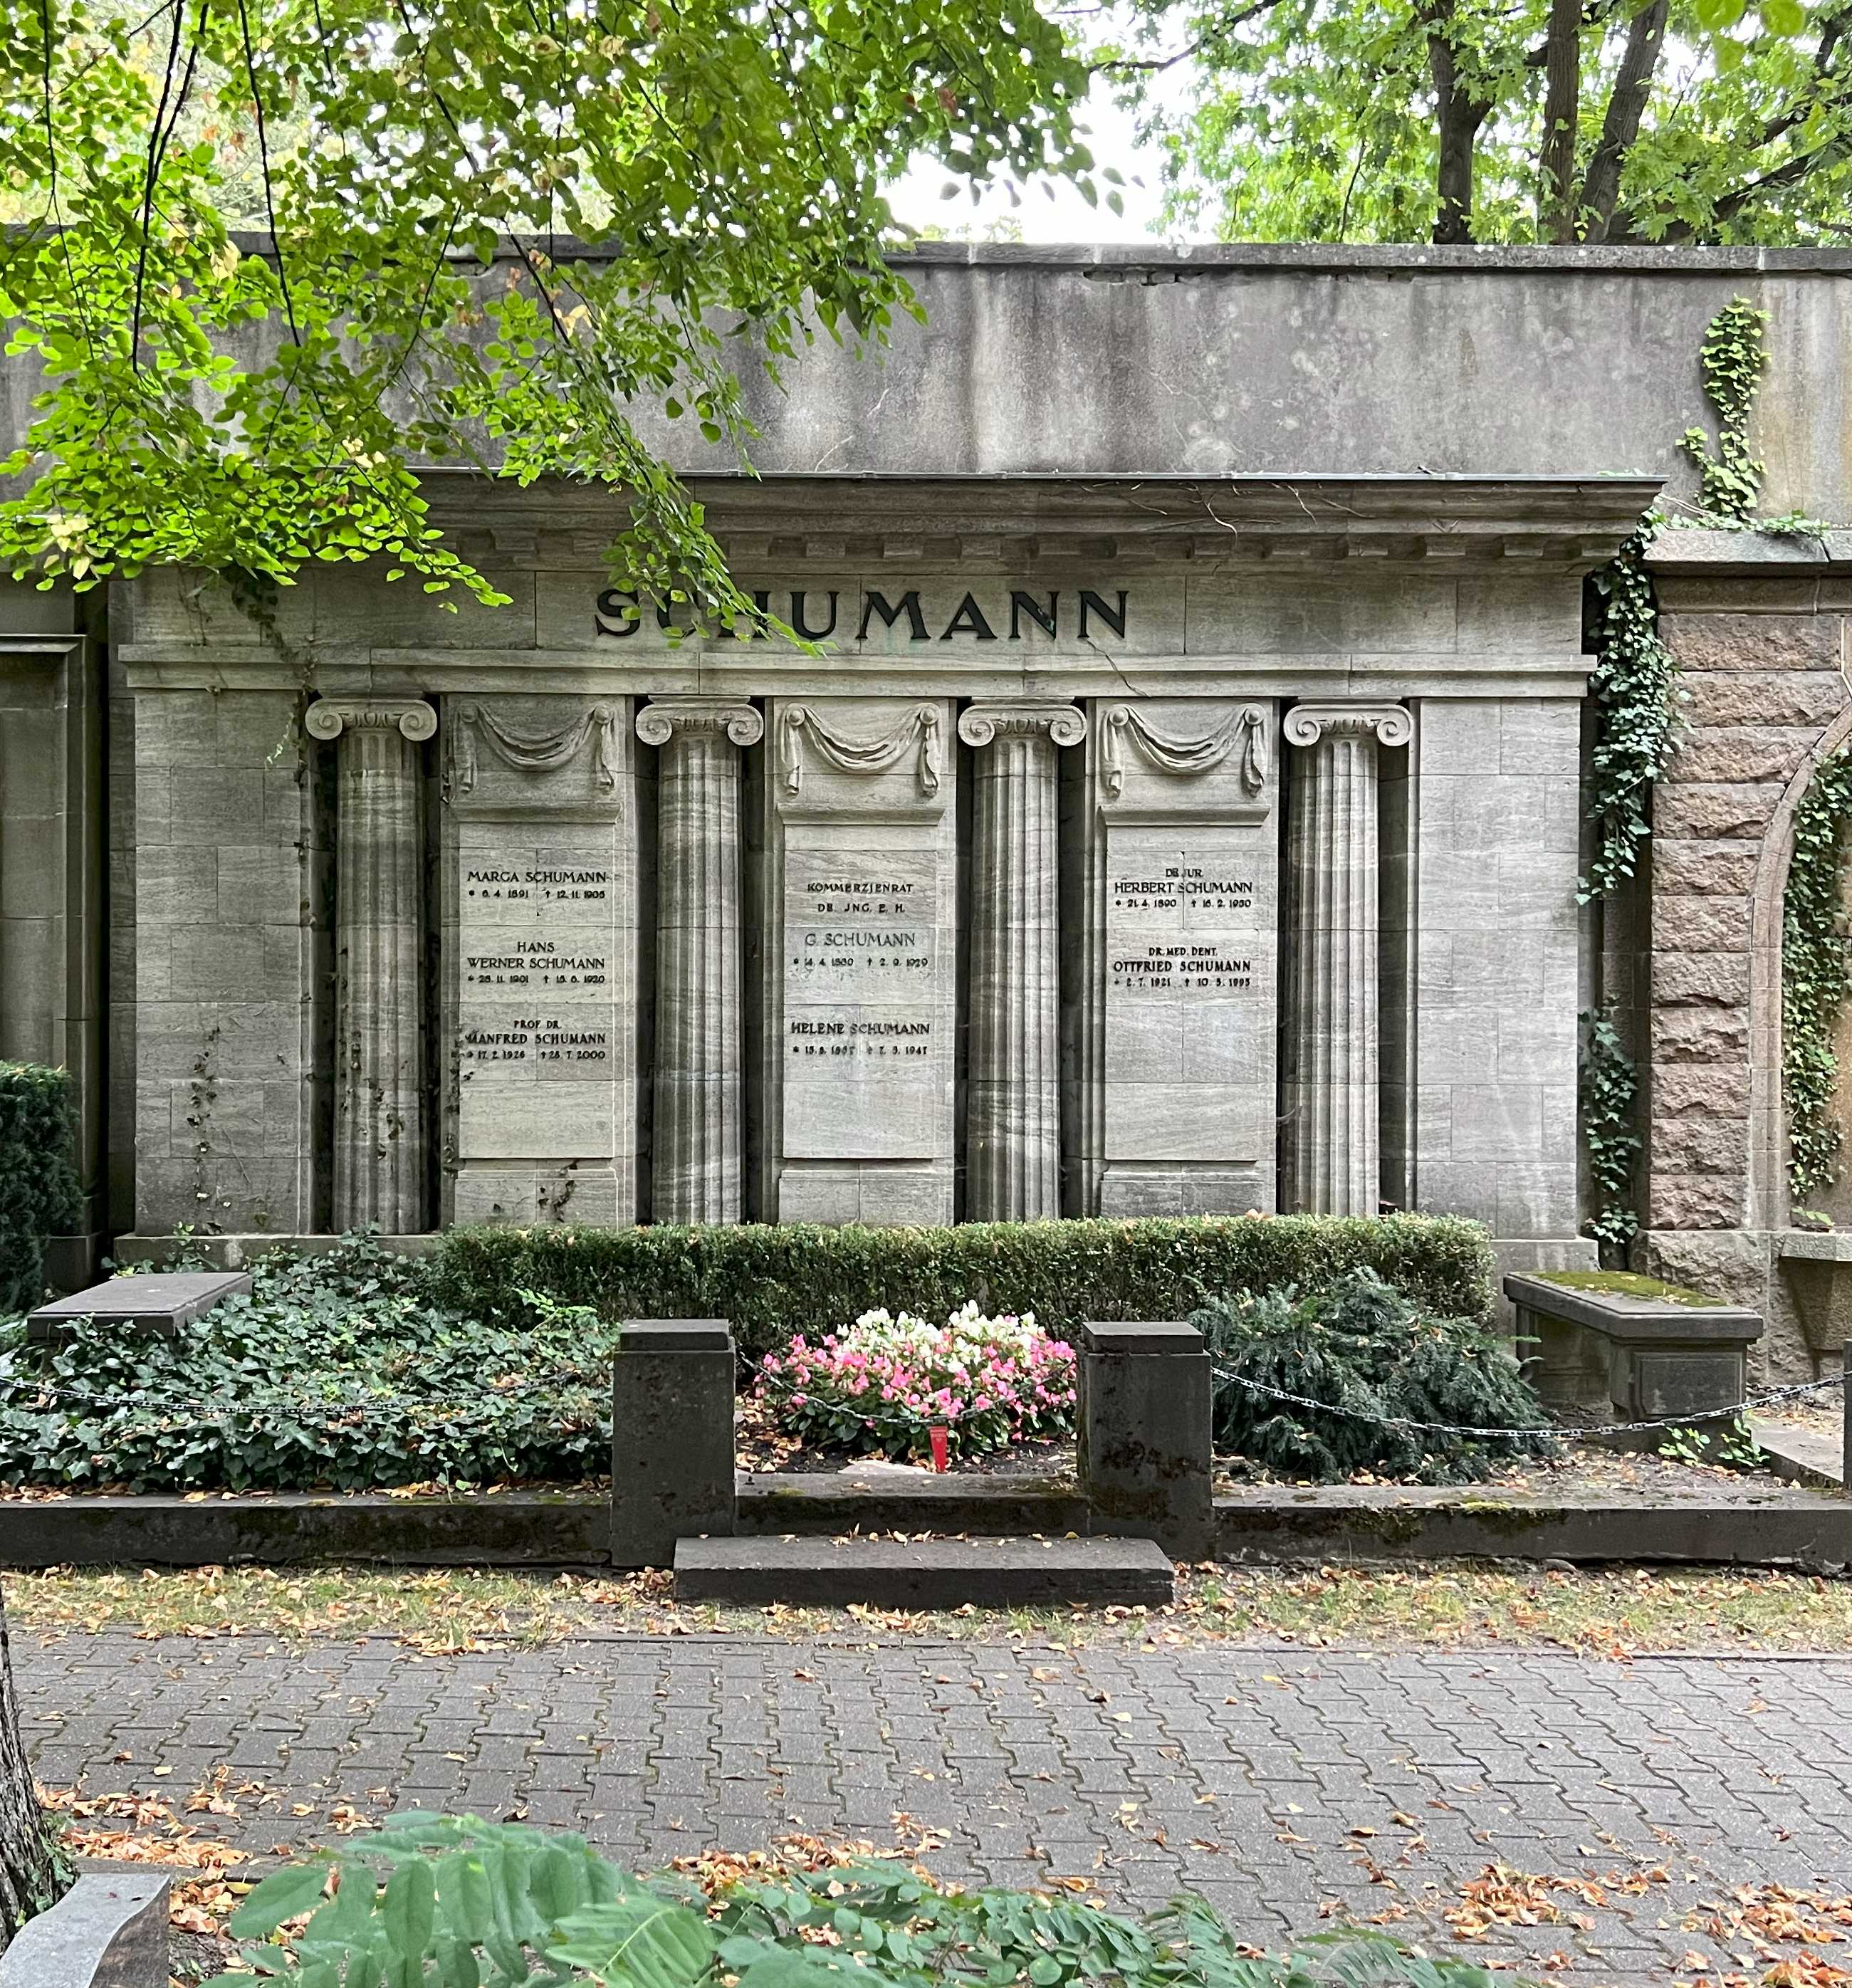 Grabstein G. Schumann, Friedhof Wilmersdorf, Berlin